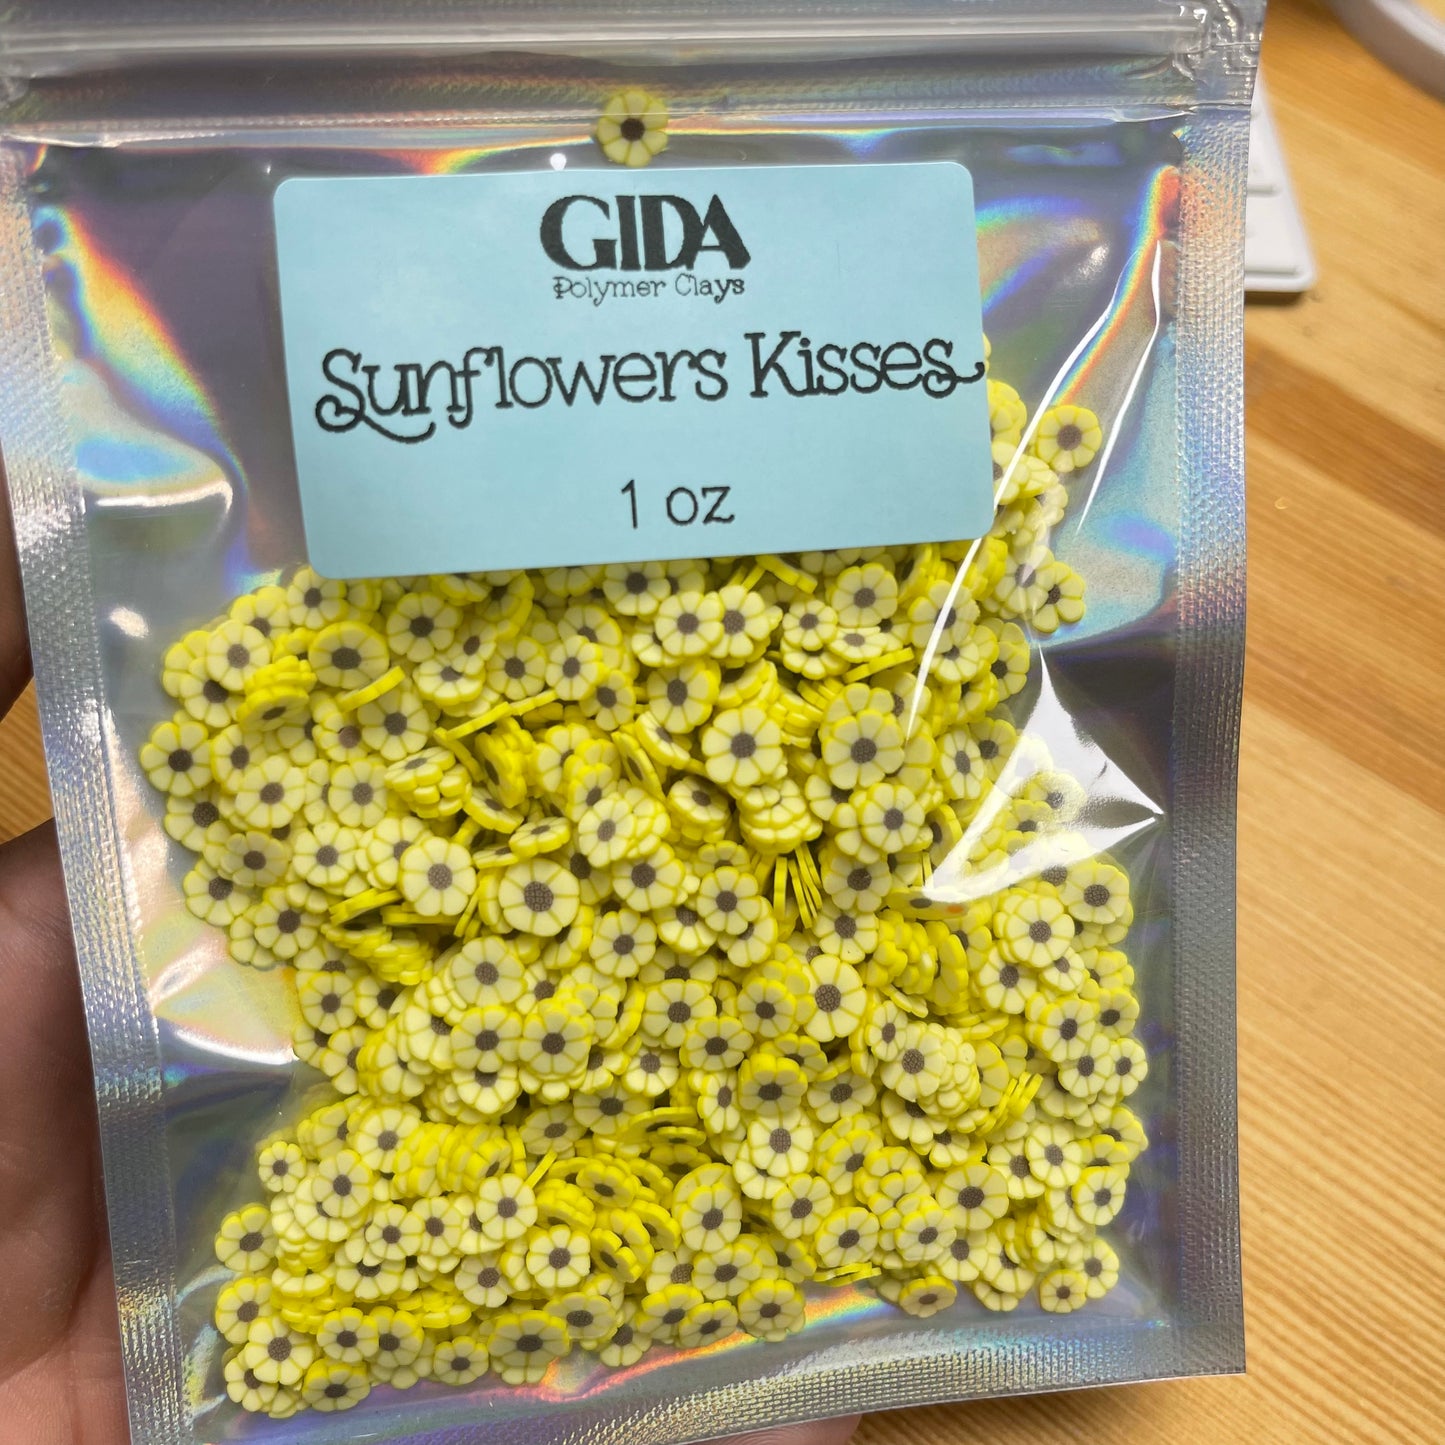 Sunflowers Kisses Polymer clay 1 oz - GIDA DESIGN 